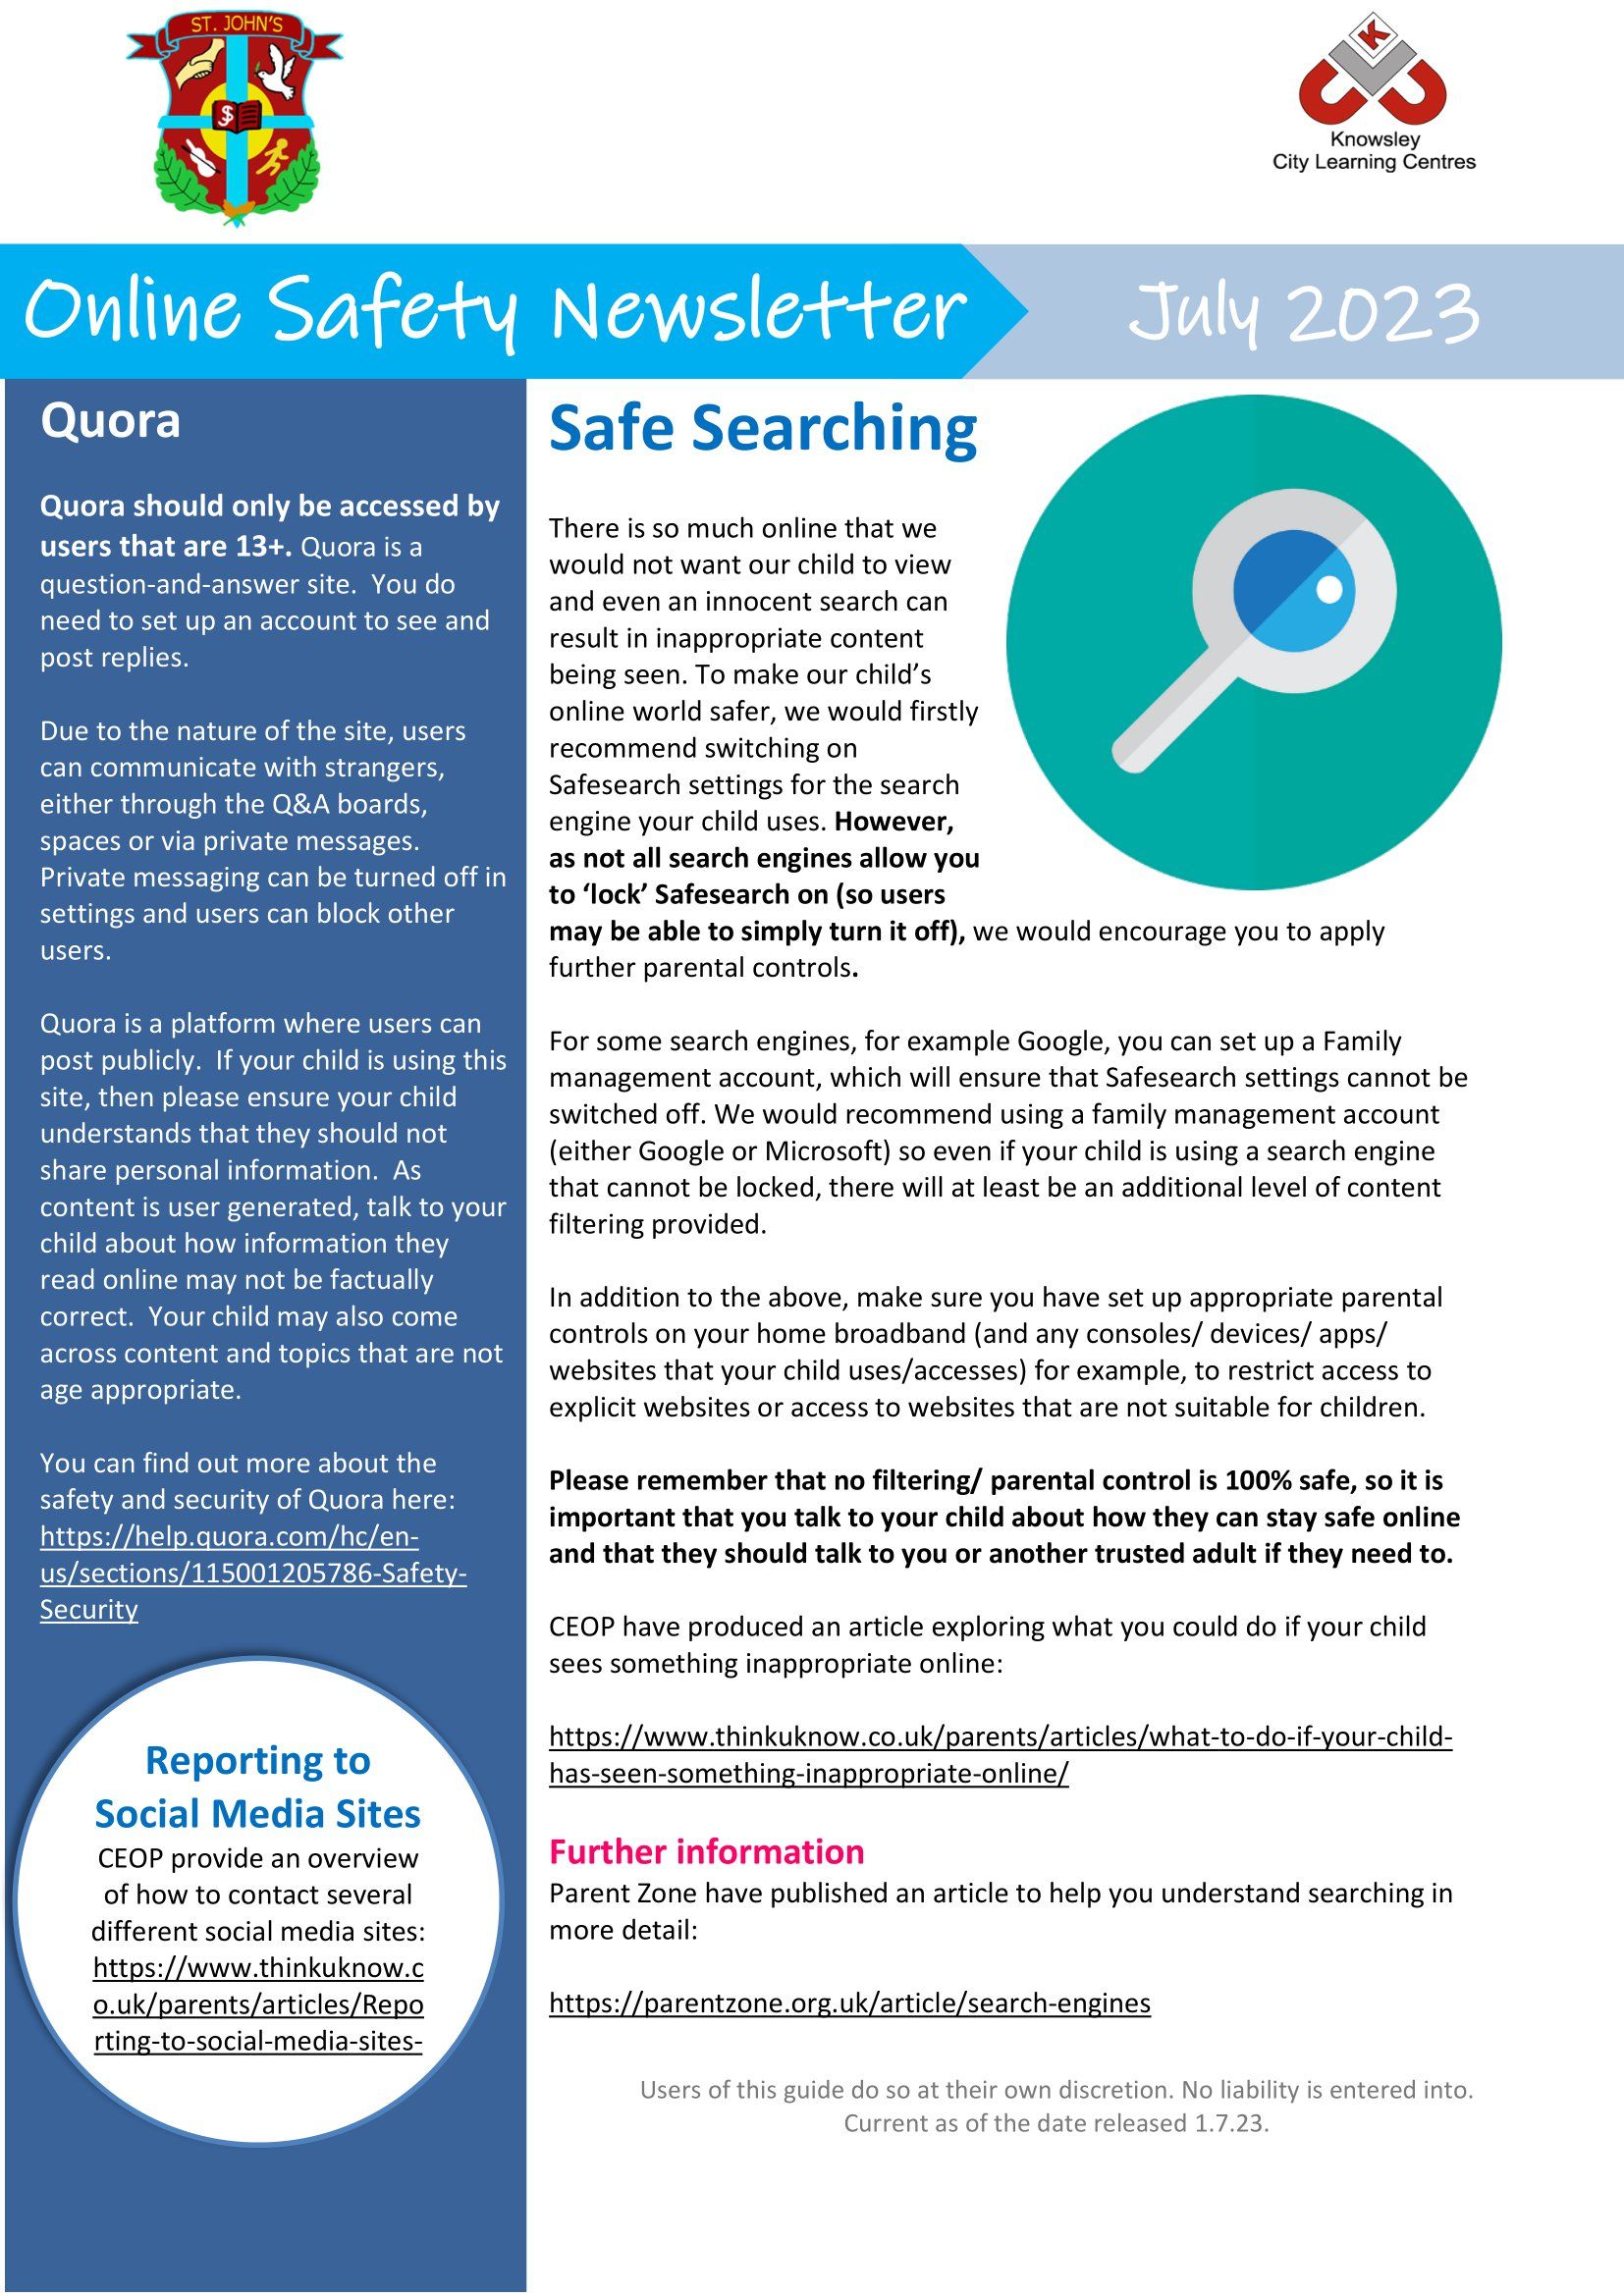 Online Safety Newsletter - July 2023